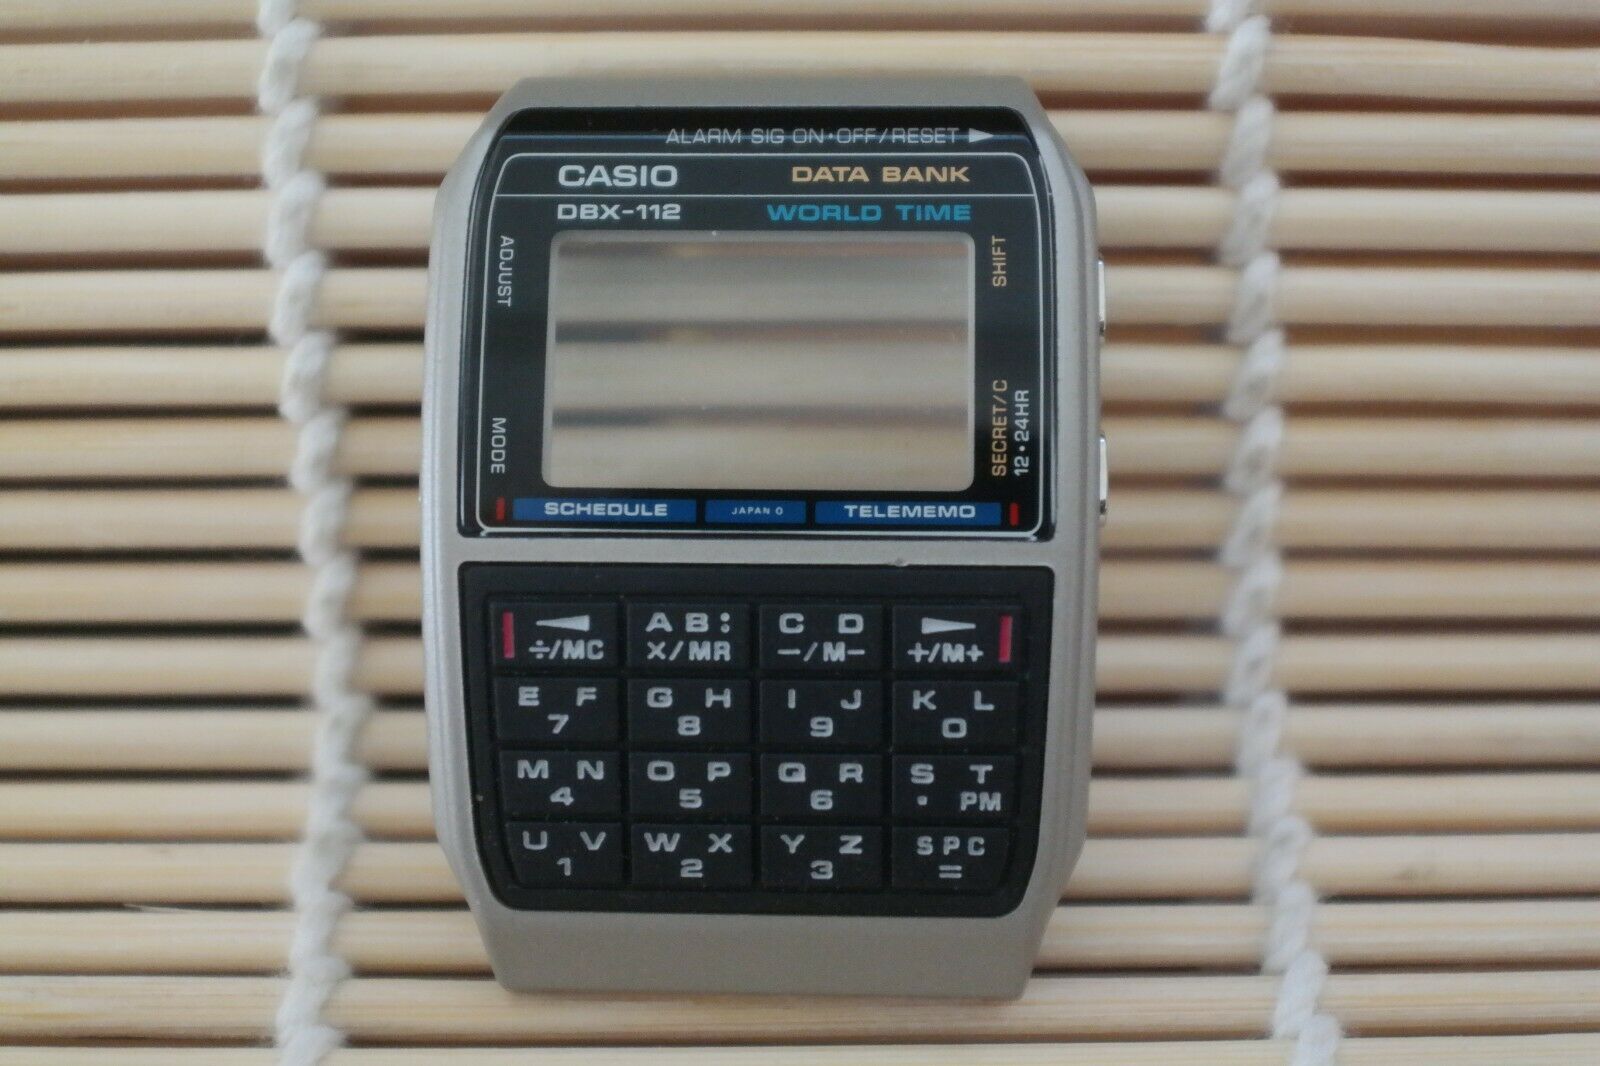 Vintage Casio Data Bank DBX-112 NOS Case for LCD Calculator watch